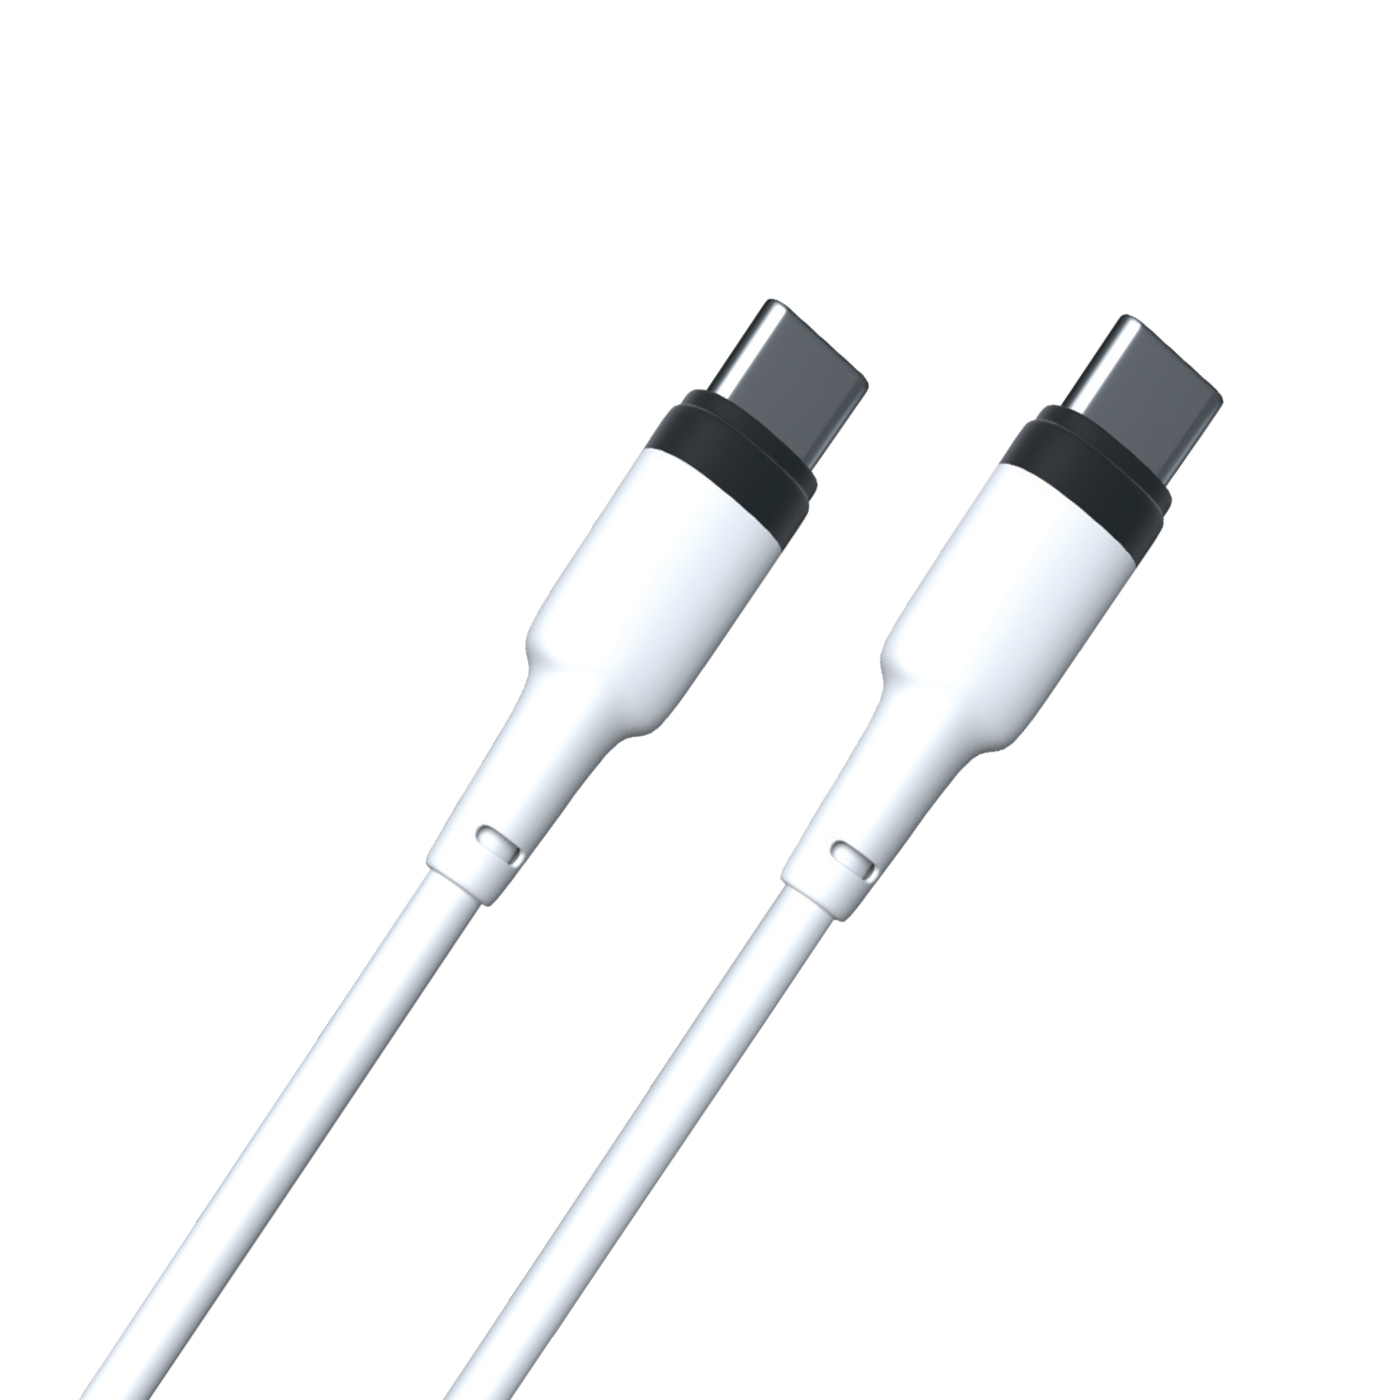 USB Type-C to USB Type-C 25W 1m White микро usb кабель с углом 90 градусов кабель для передачи данных шнур для зарядного устройства для samsung xiaomi аксессуары для быстрой зарядки usb